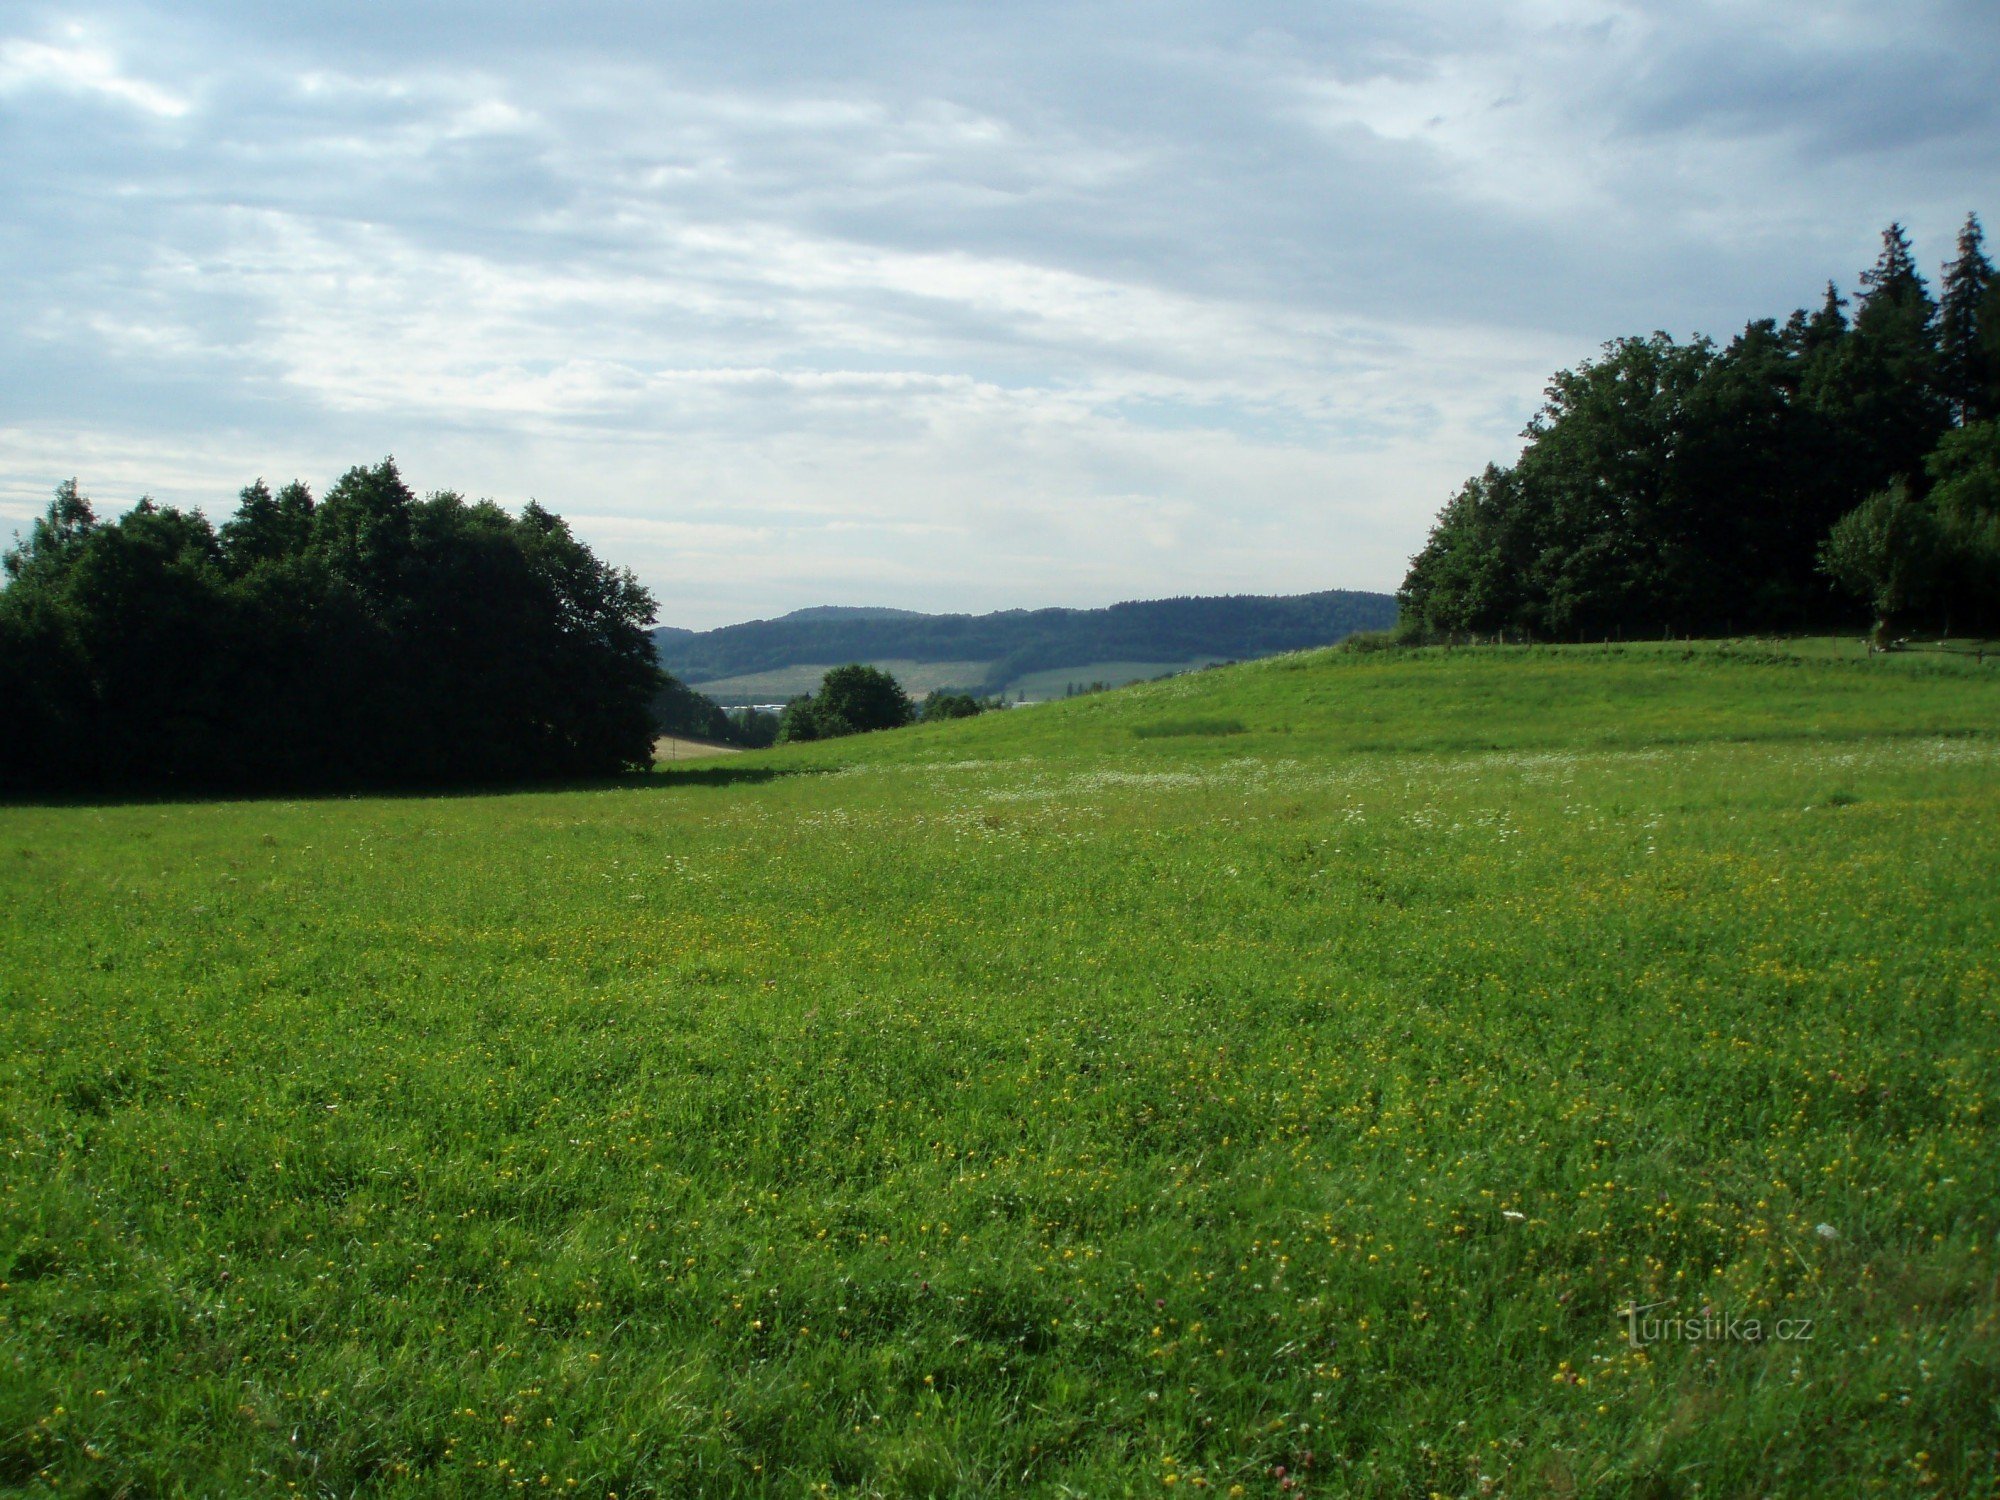 Veřovice környéke